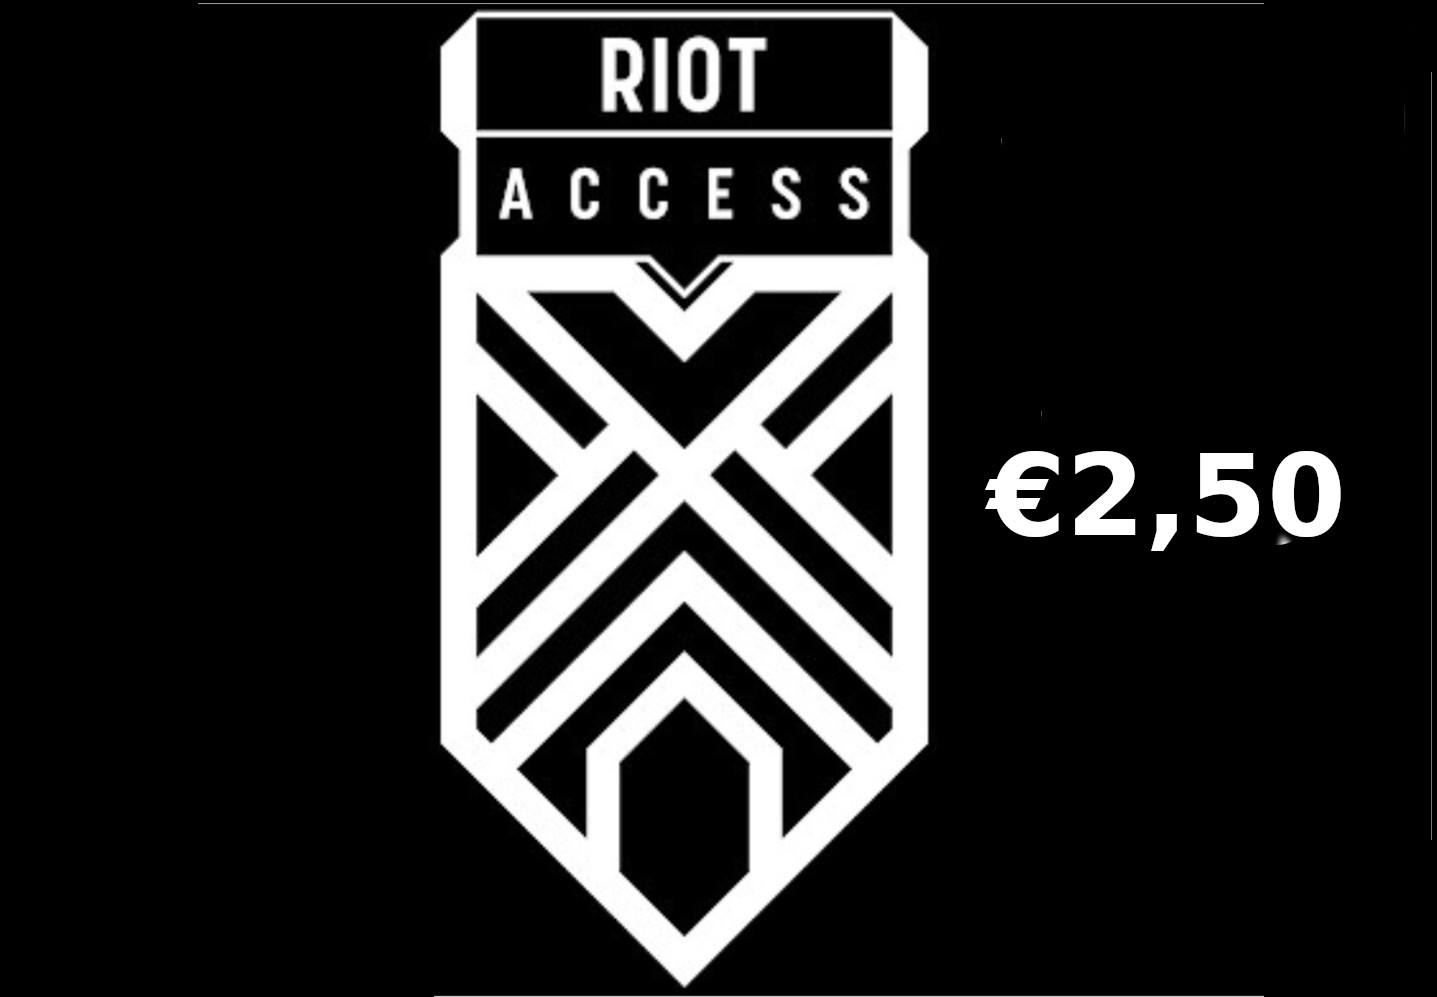 Riot Access €2,50 Code EU